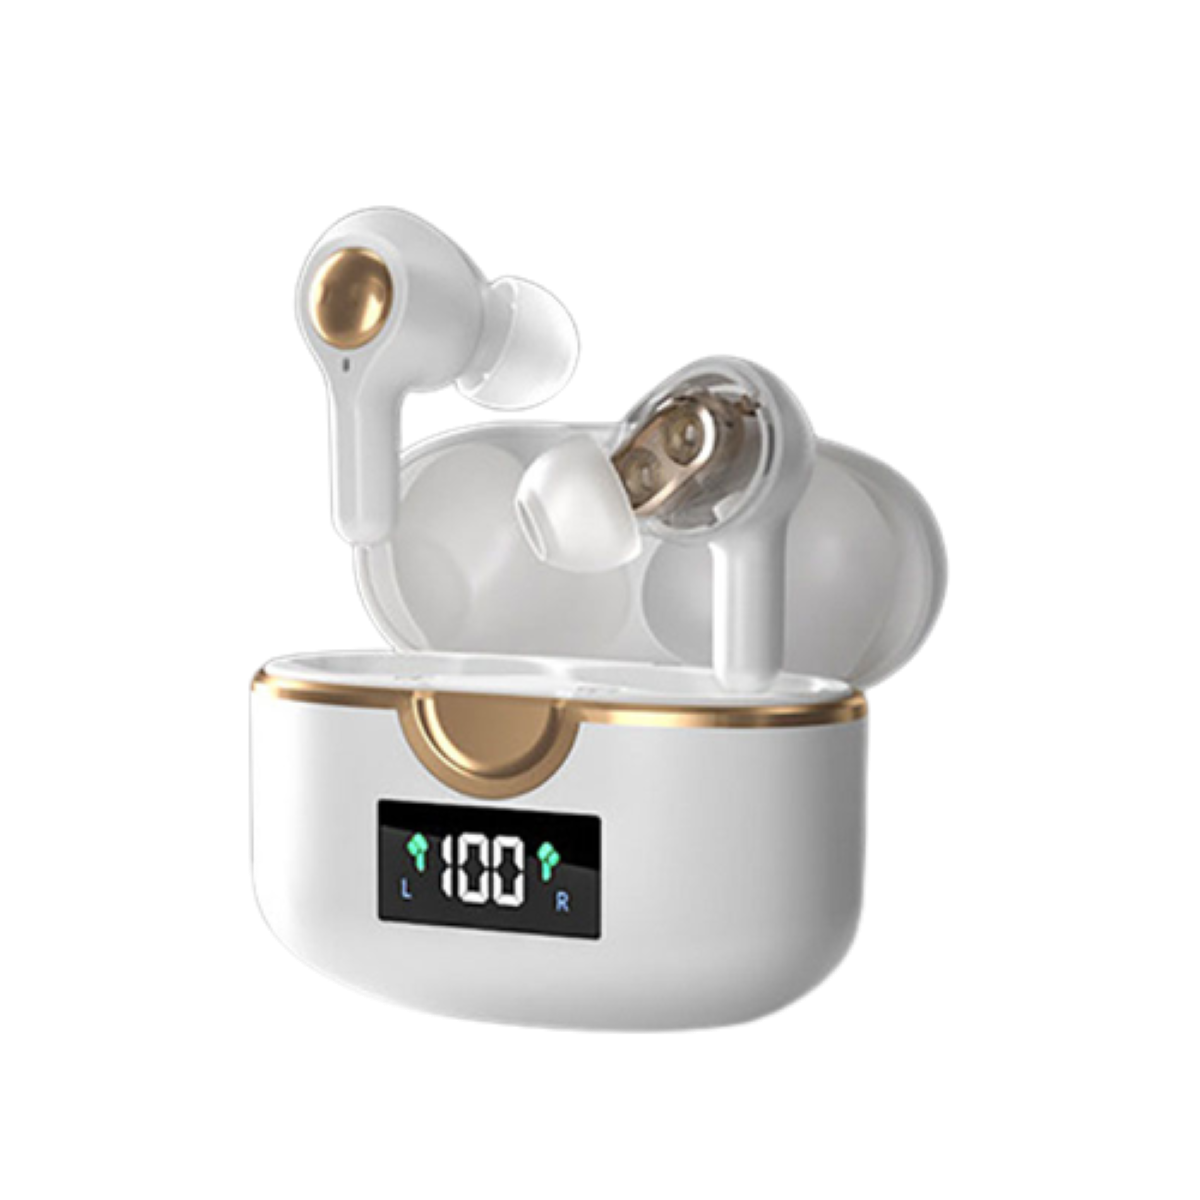 ENBAOXIN T22 Bluetooth Headset - Tausend-Dollar-Klangqualität, Chip, Bluetooth In-ear Host Weiß Bluetooth-Kopfhörer Dual